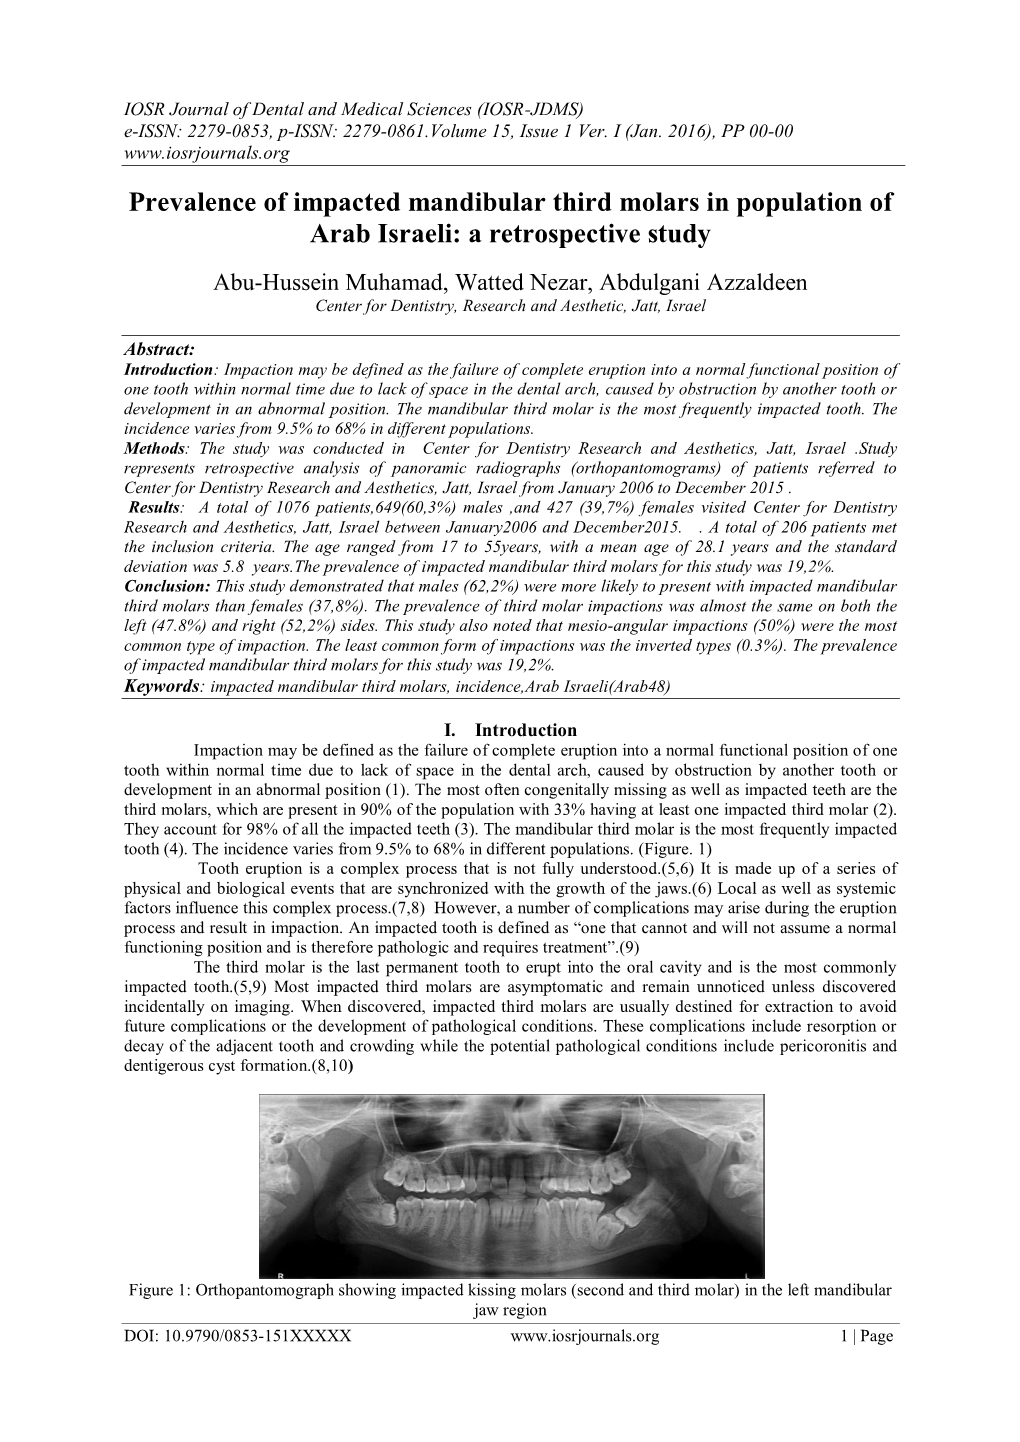 Prevalence of Impacted Mandibular Third Molars in Population of Arab Israeli: a Retrospective Study